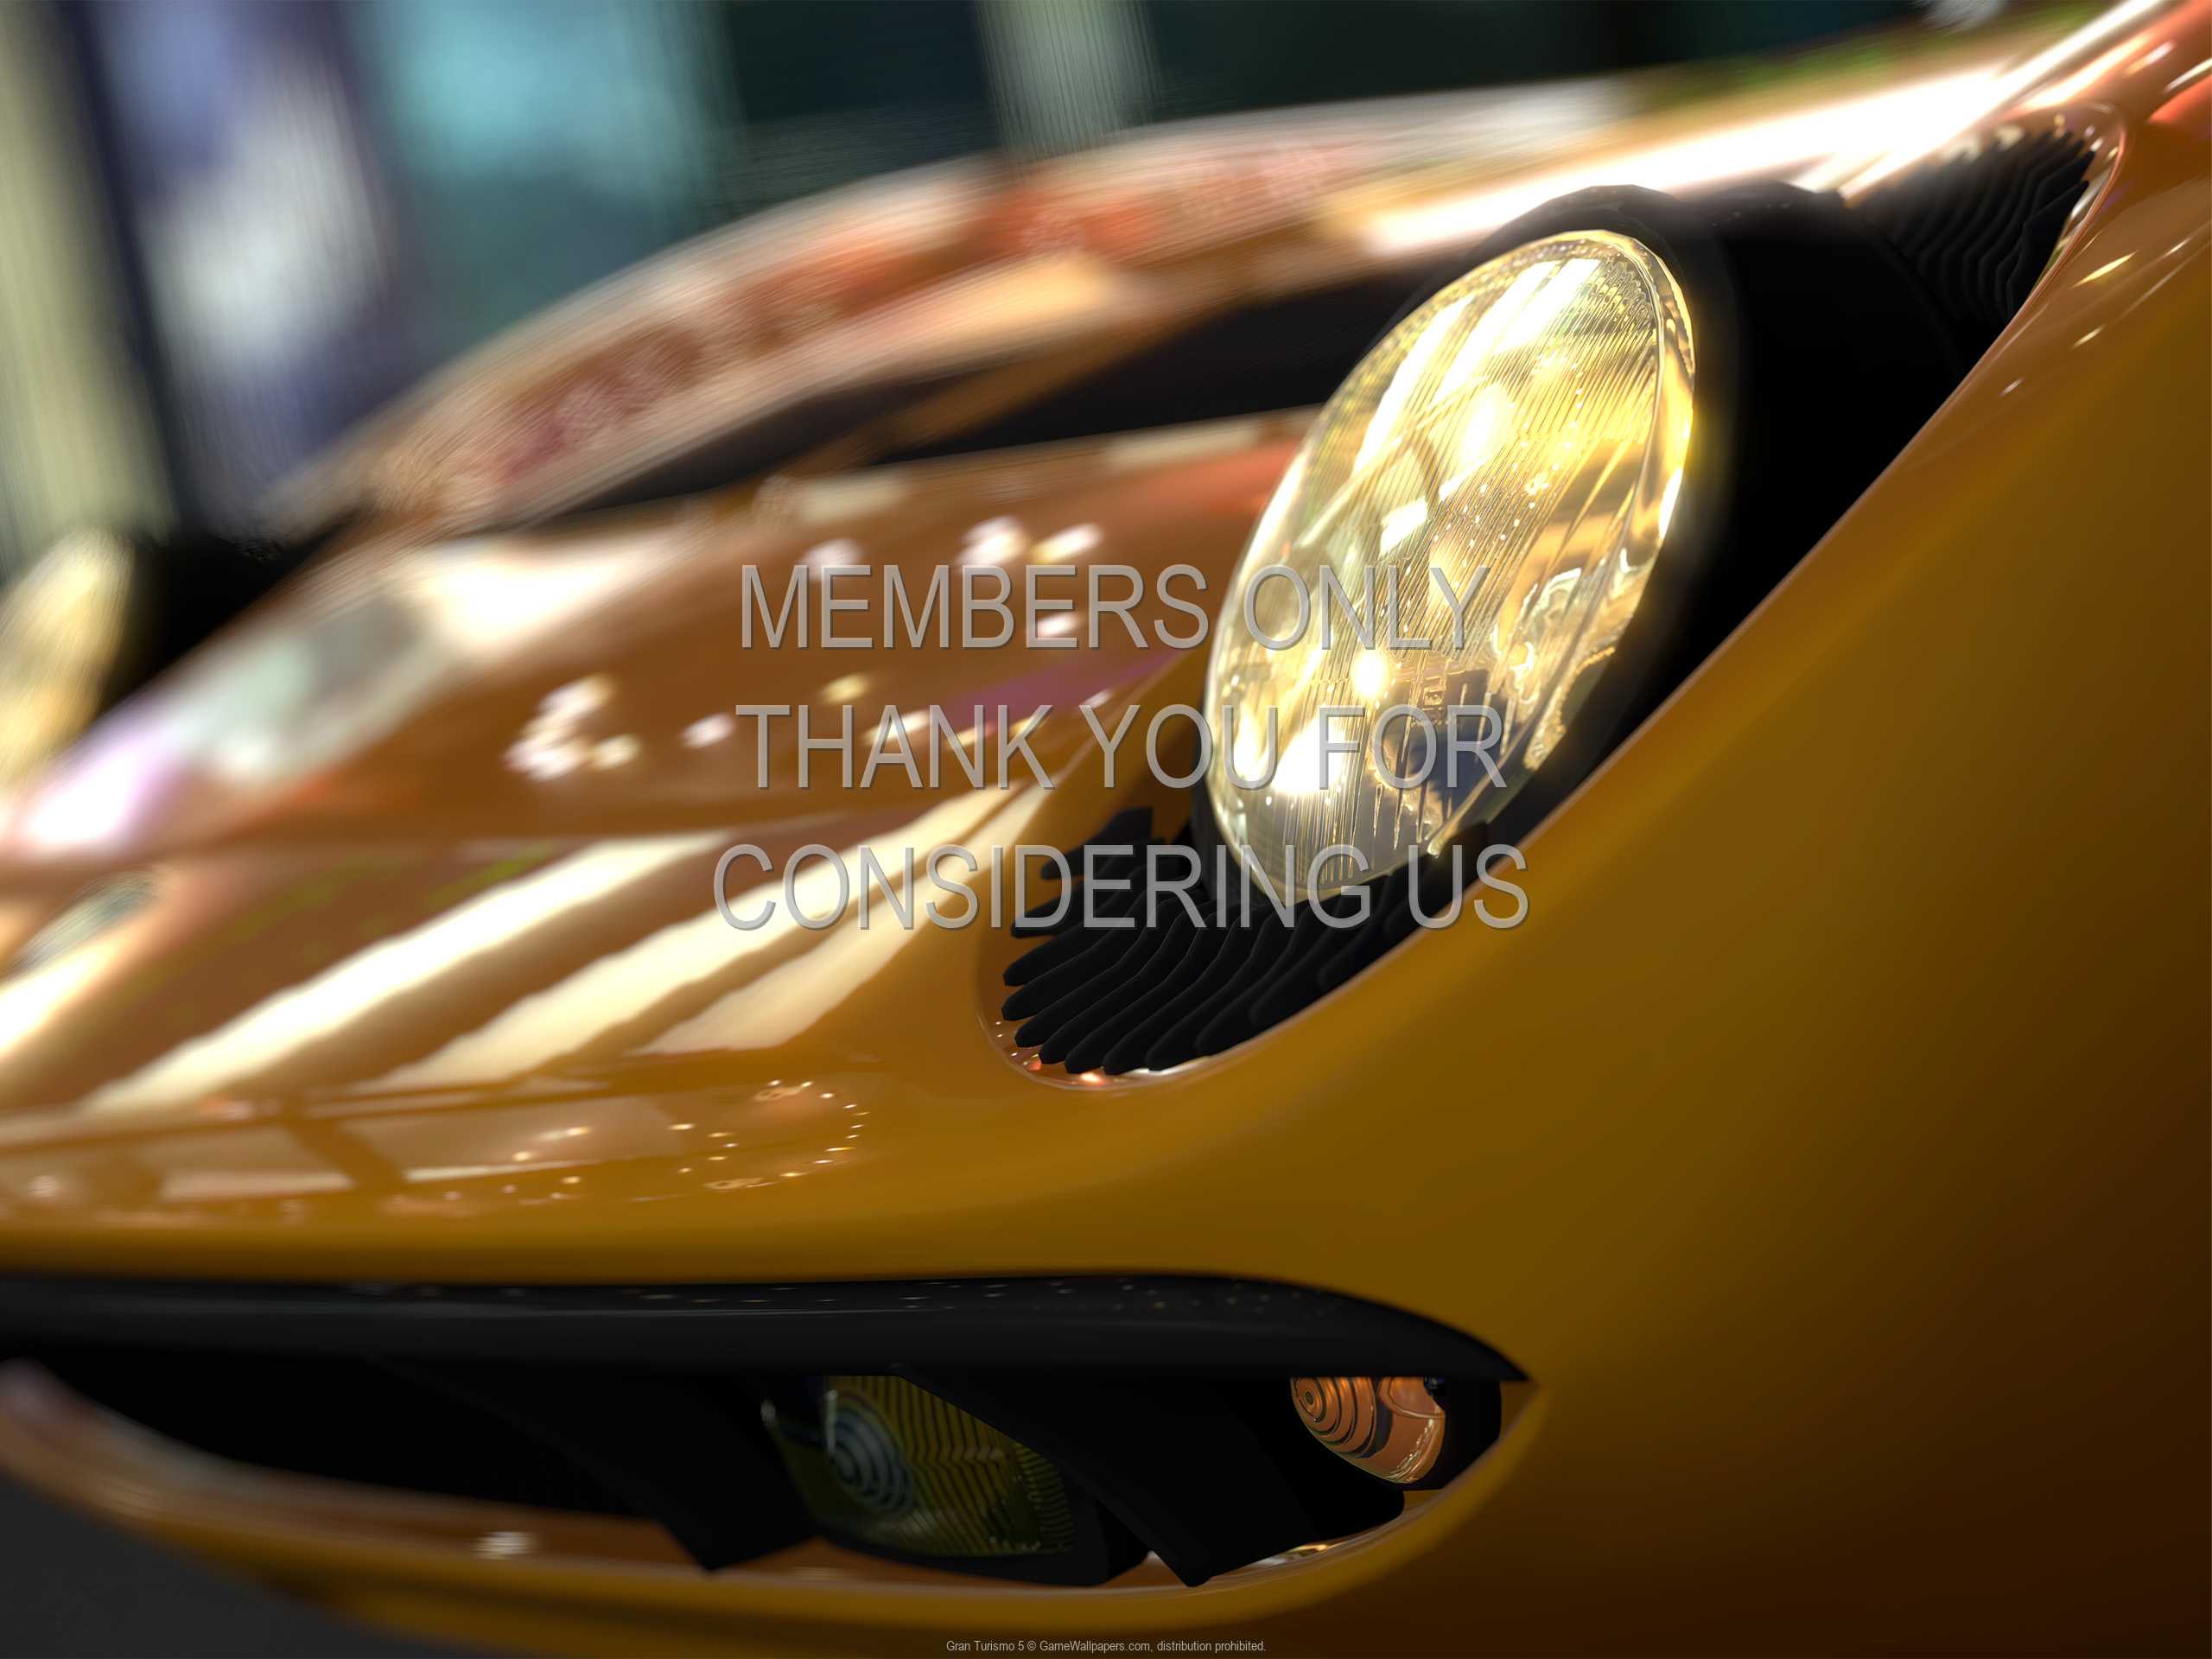 Gran Turismo 5 1080p Horizontal Mobile wallpaper or background 19